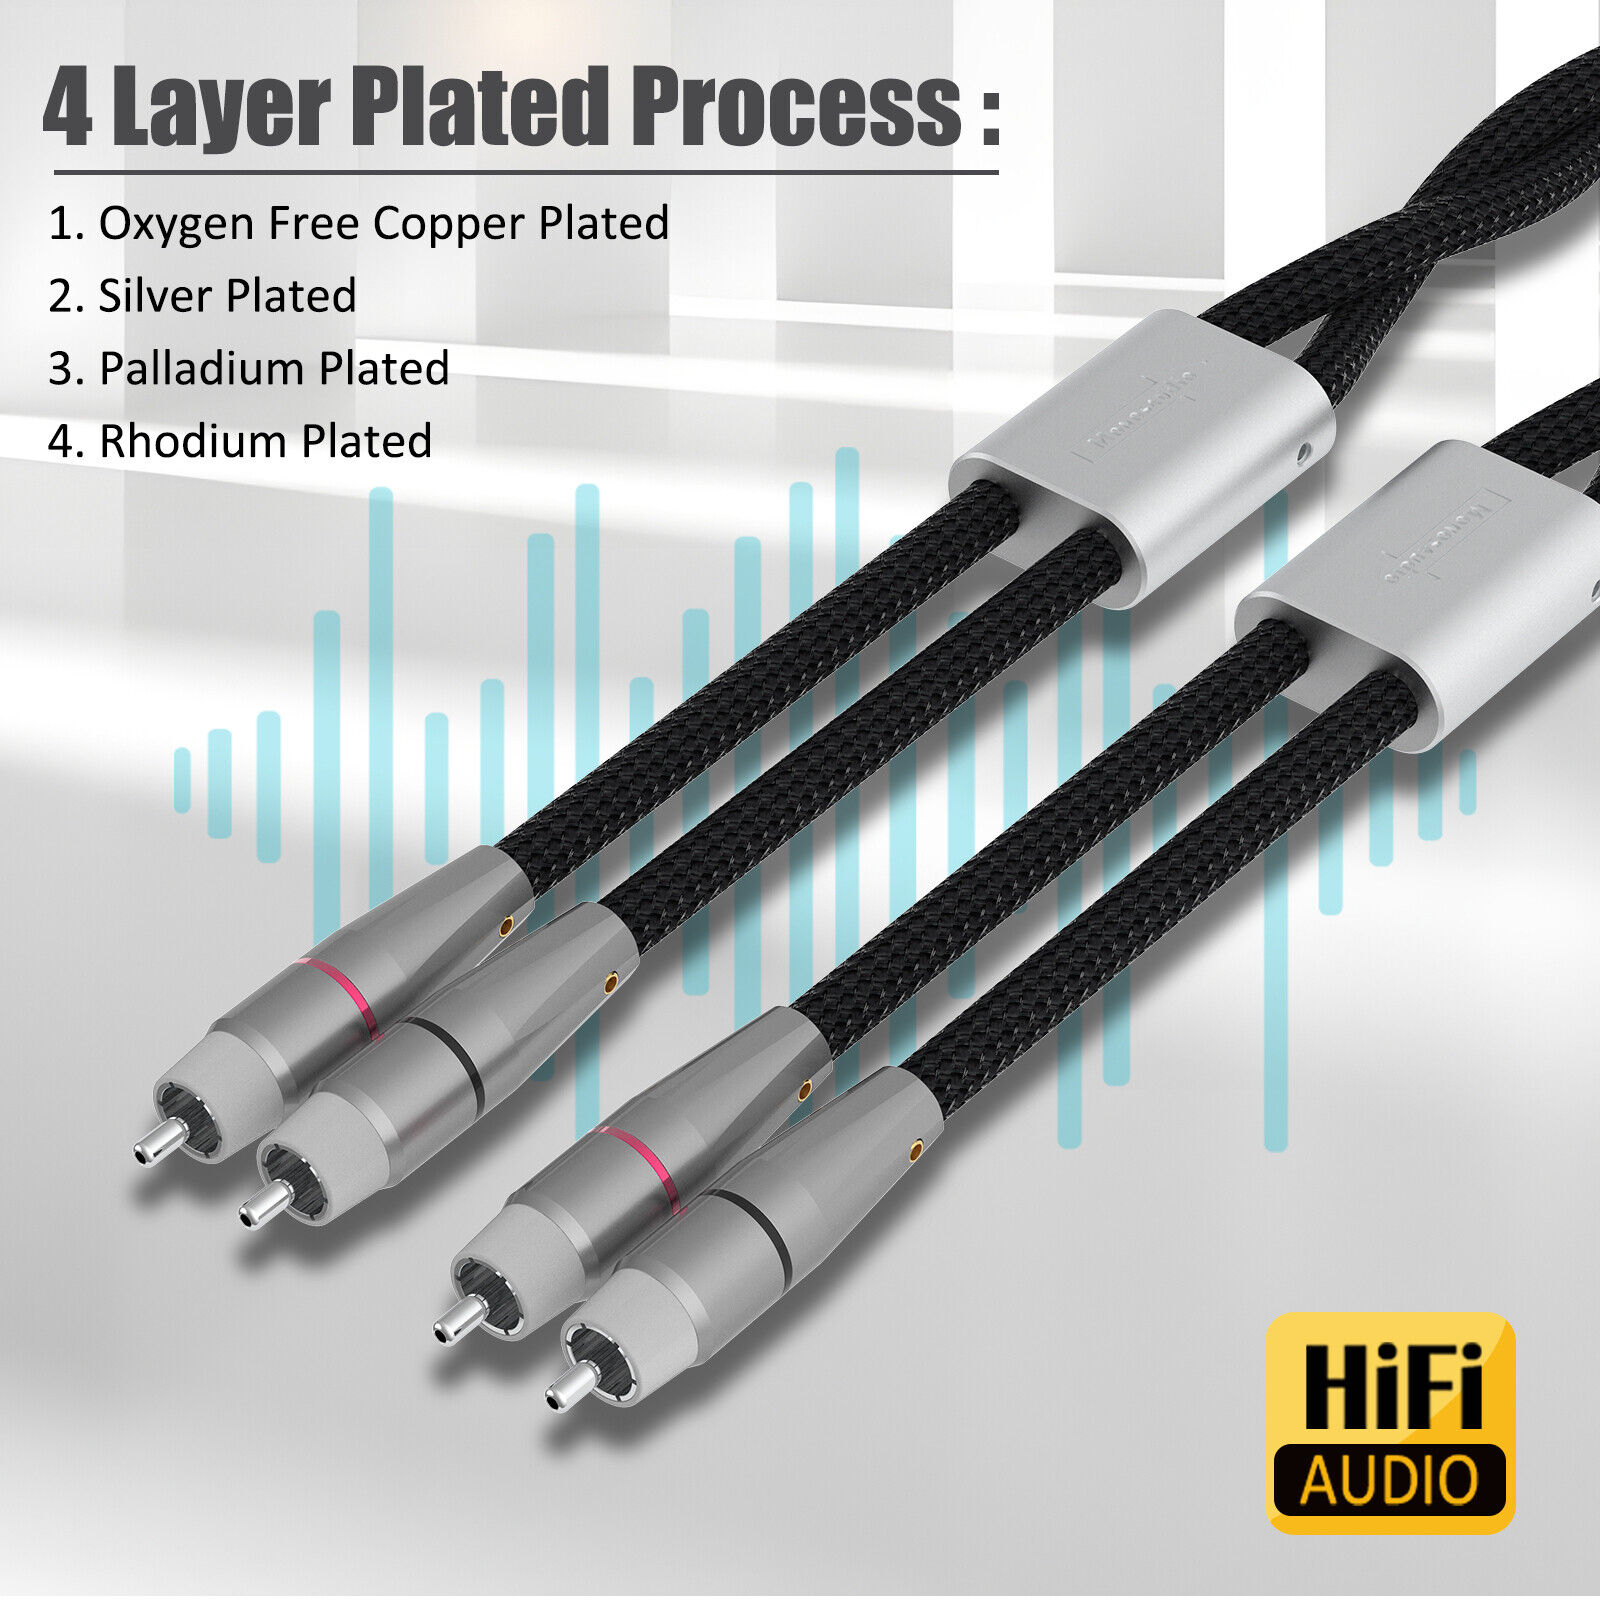 Audio HIFI RCA Cables Multiple OCC Pure Copper+Silver Plated Hybrid Signal Wire